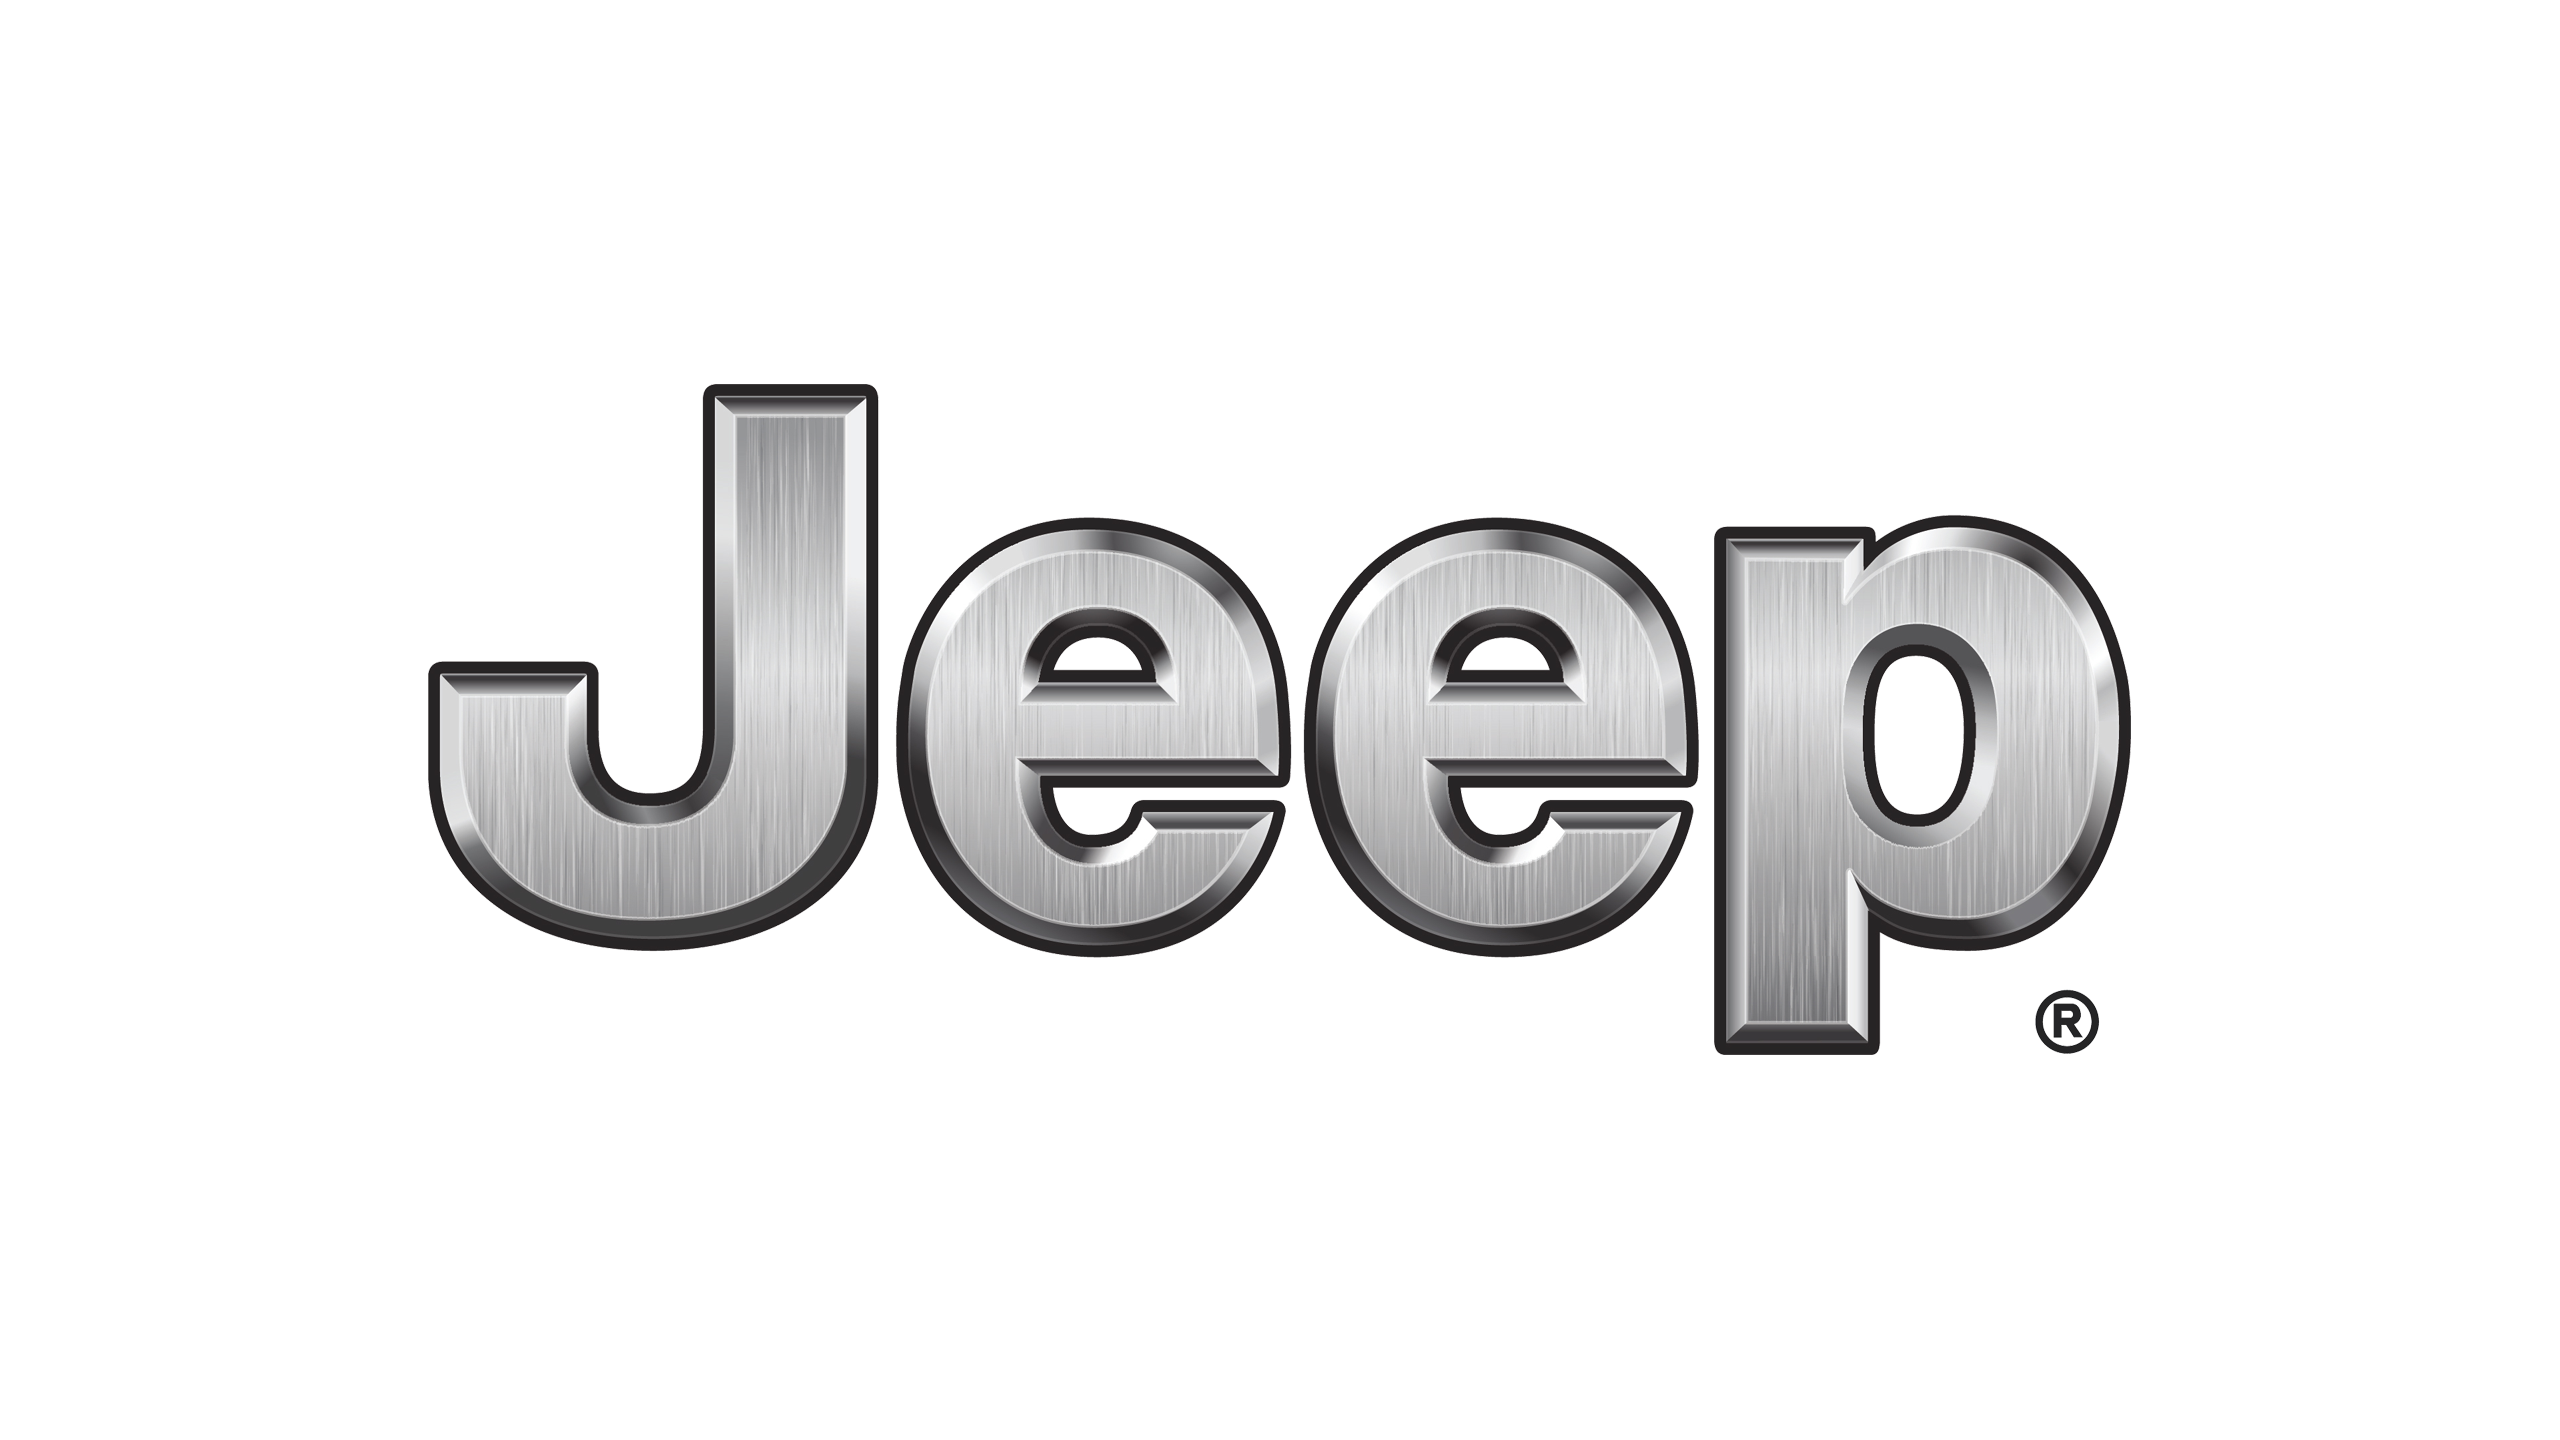 Jeep-logo-3D-2560x1440.png